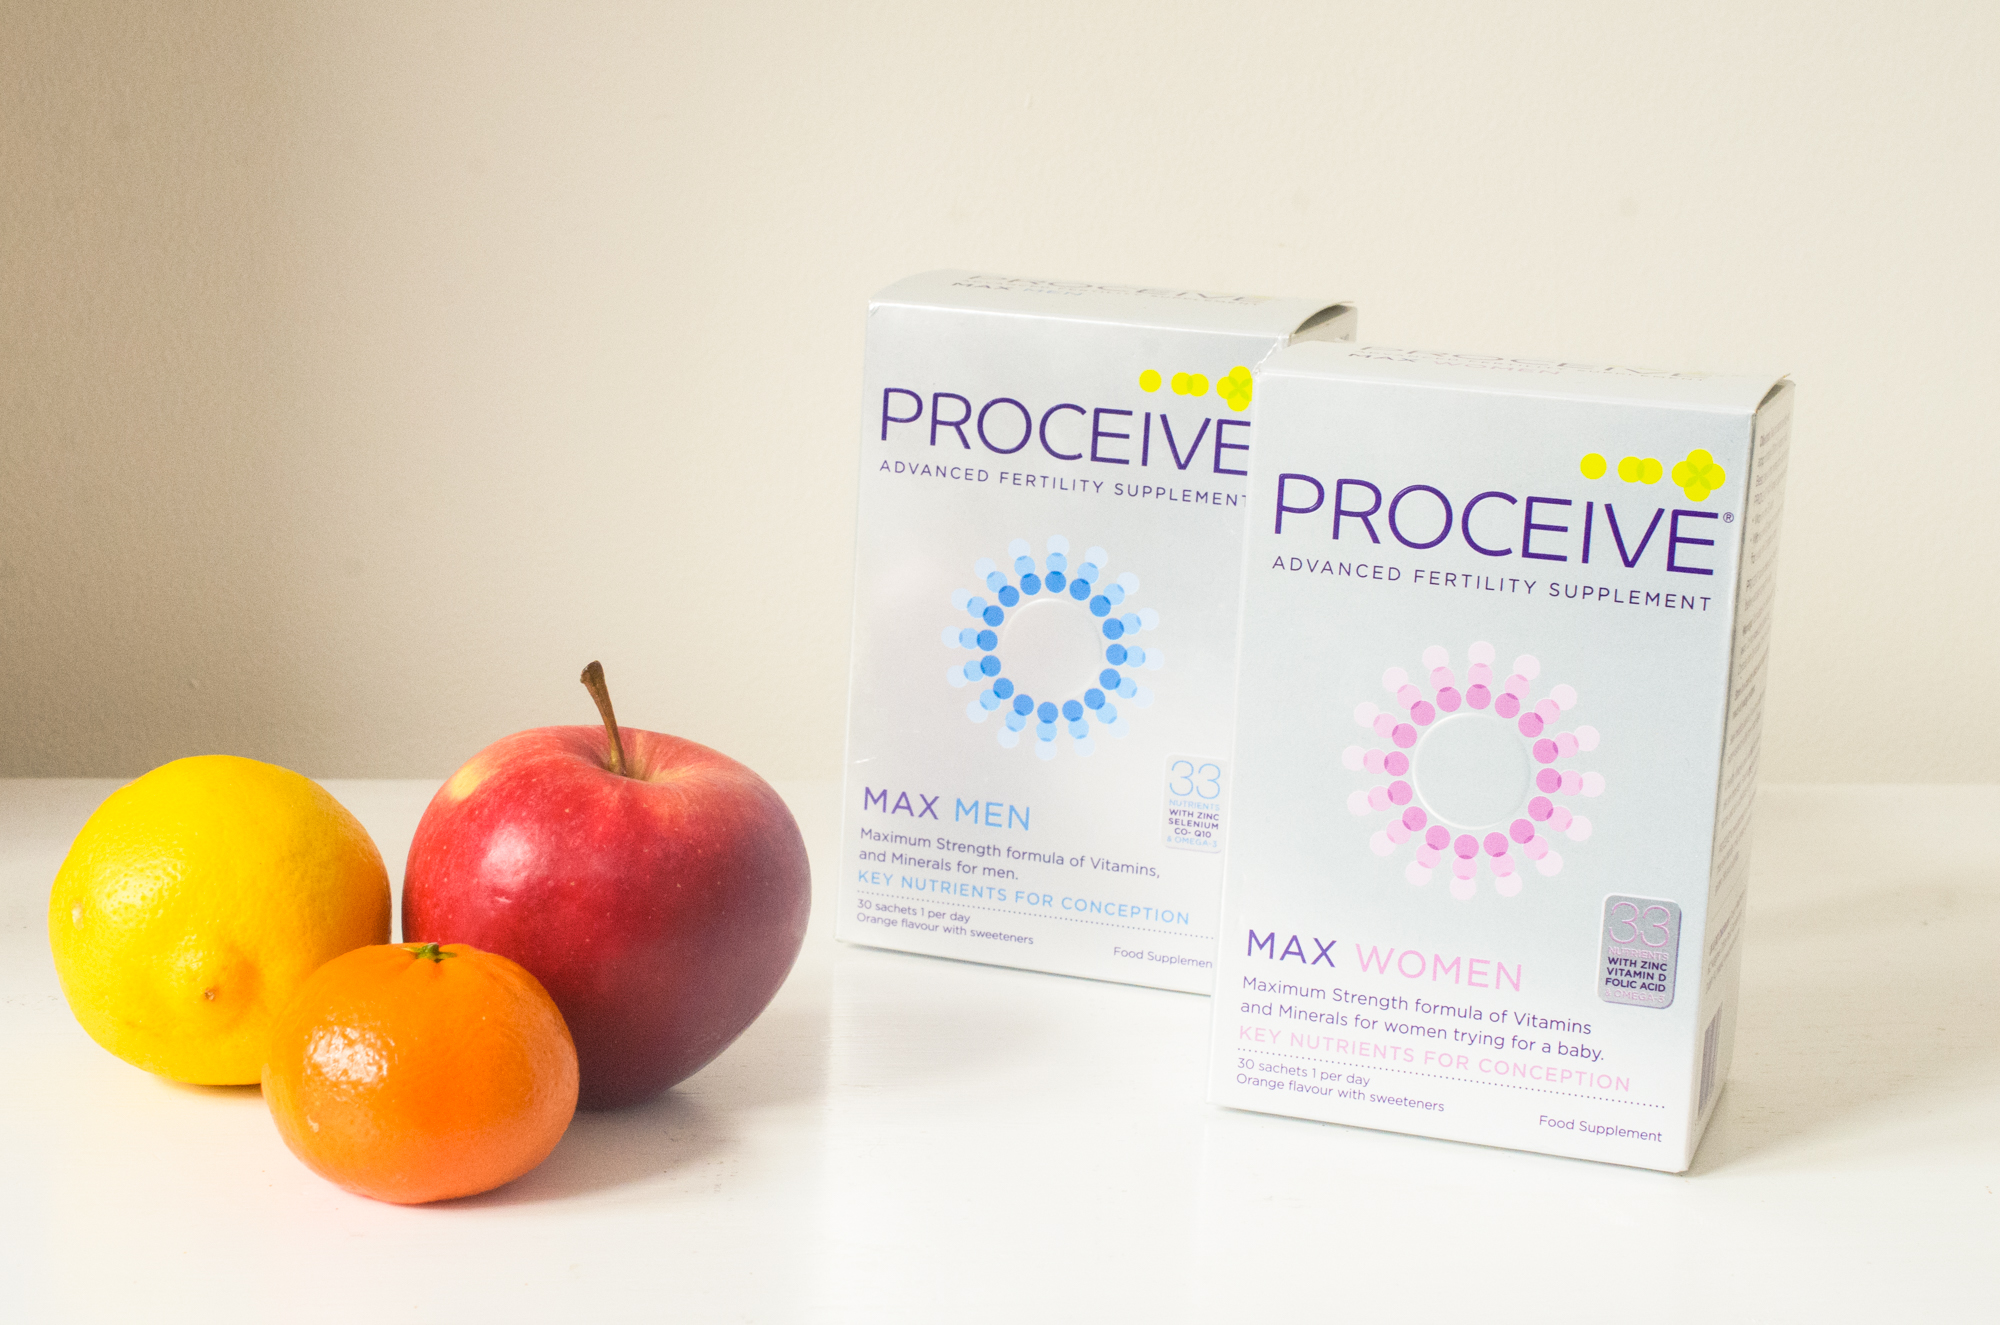 Proceive Max Fertility Supplement